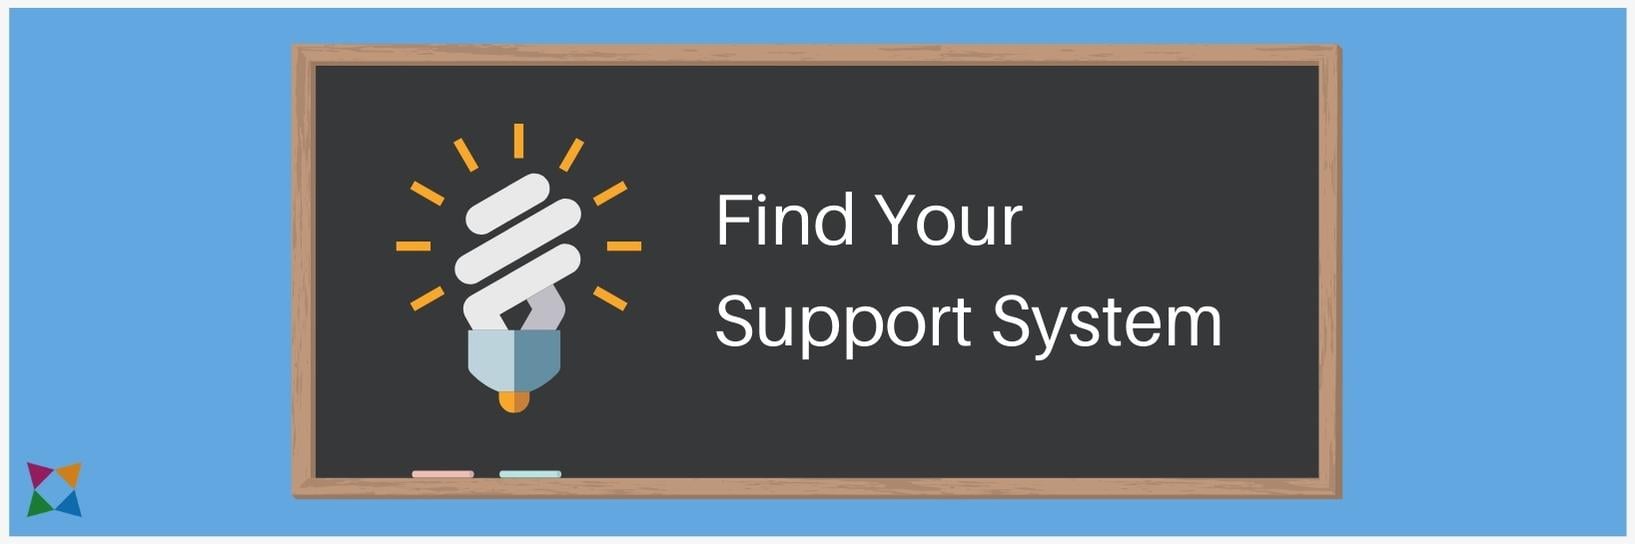 support-system-esl-ell-students-cte